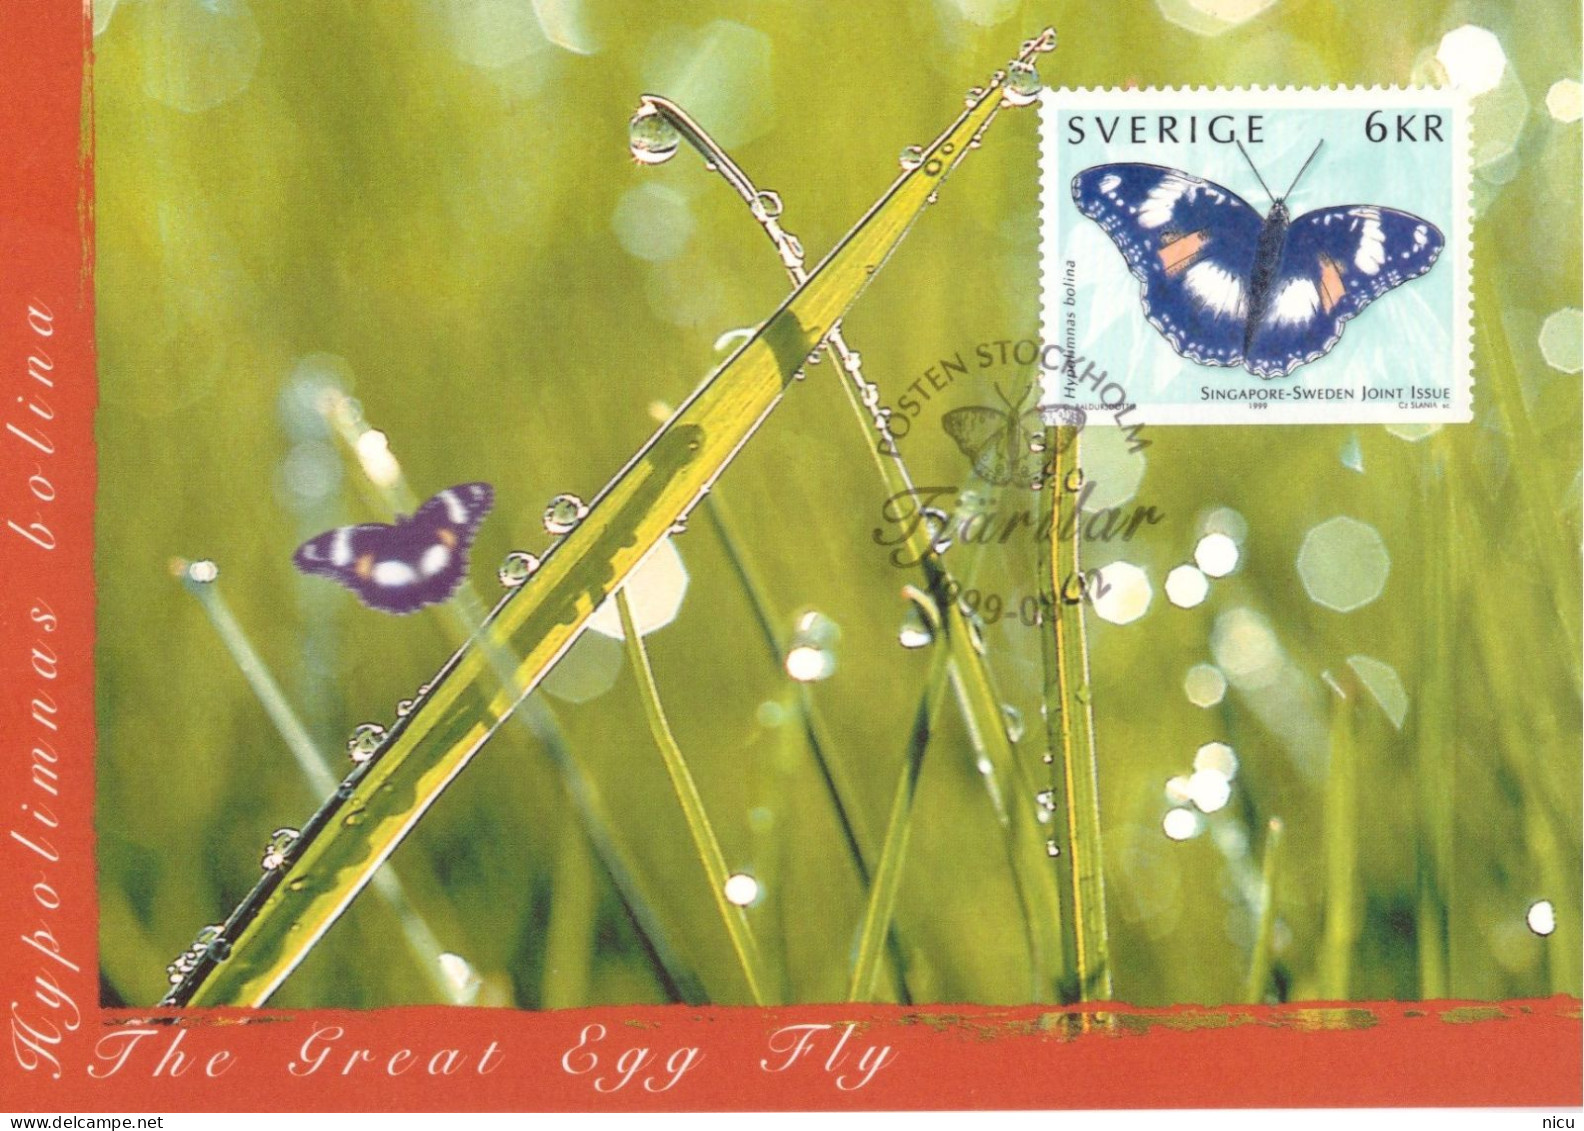 1999 - BUTTERFLIES - COMMON ISSUE SINGAPORE - SWEDEN - Tarjetas – Máxima